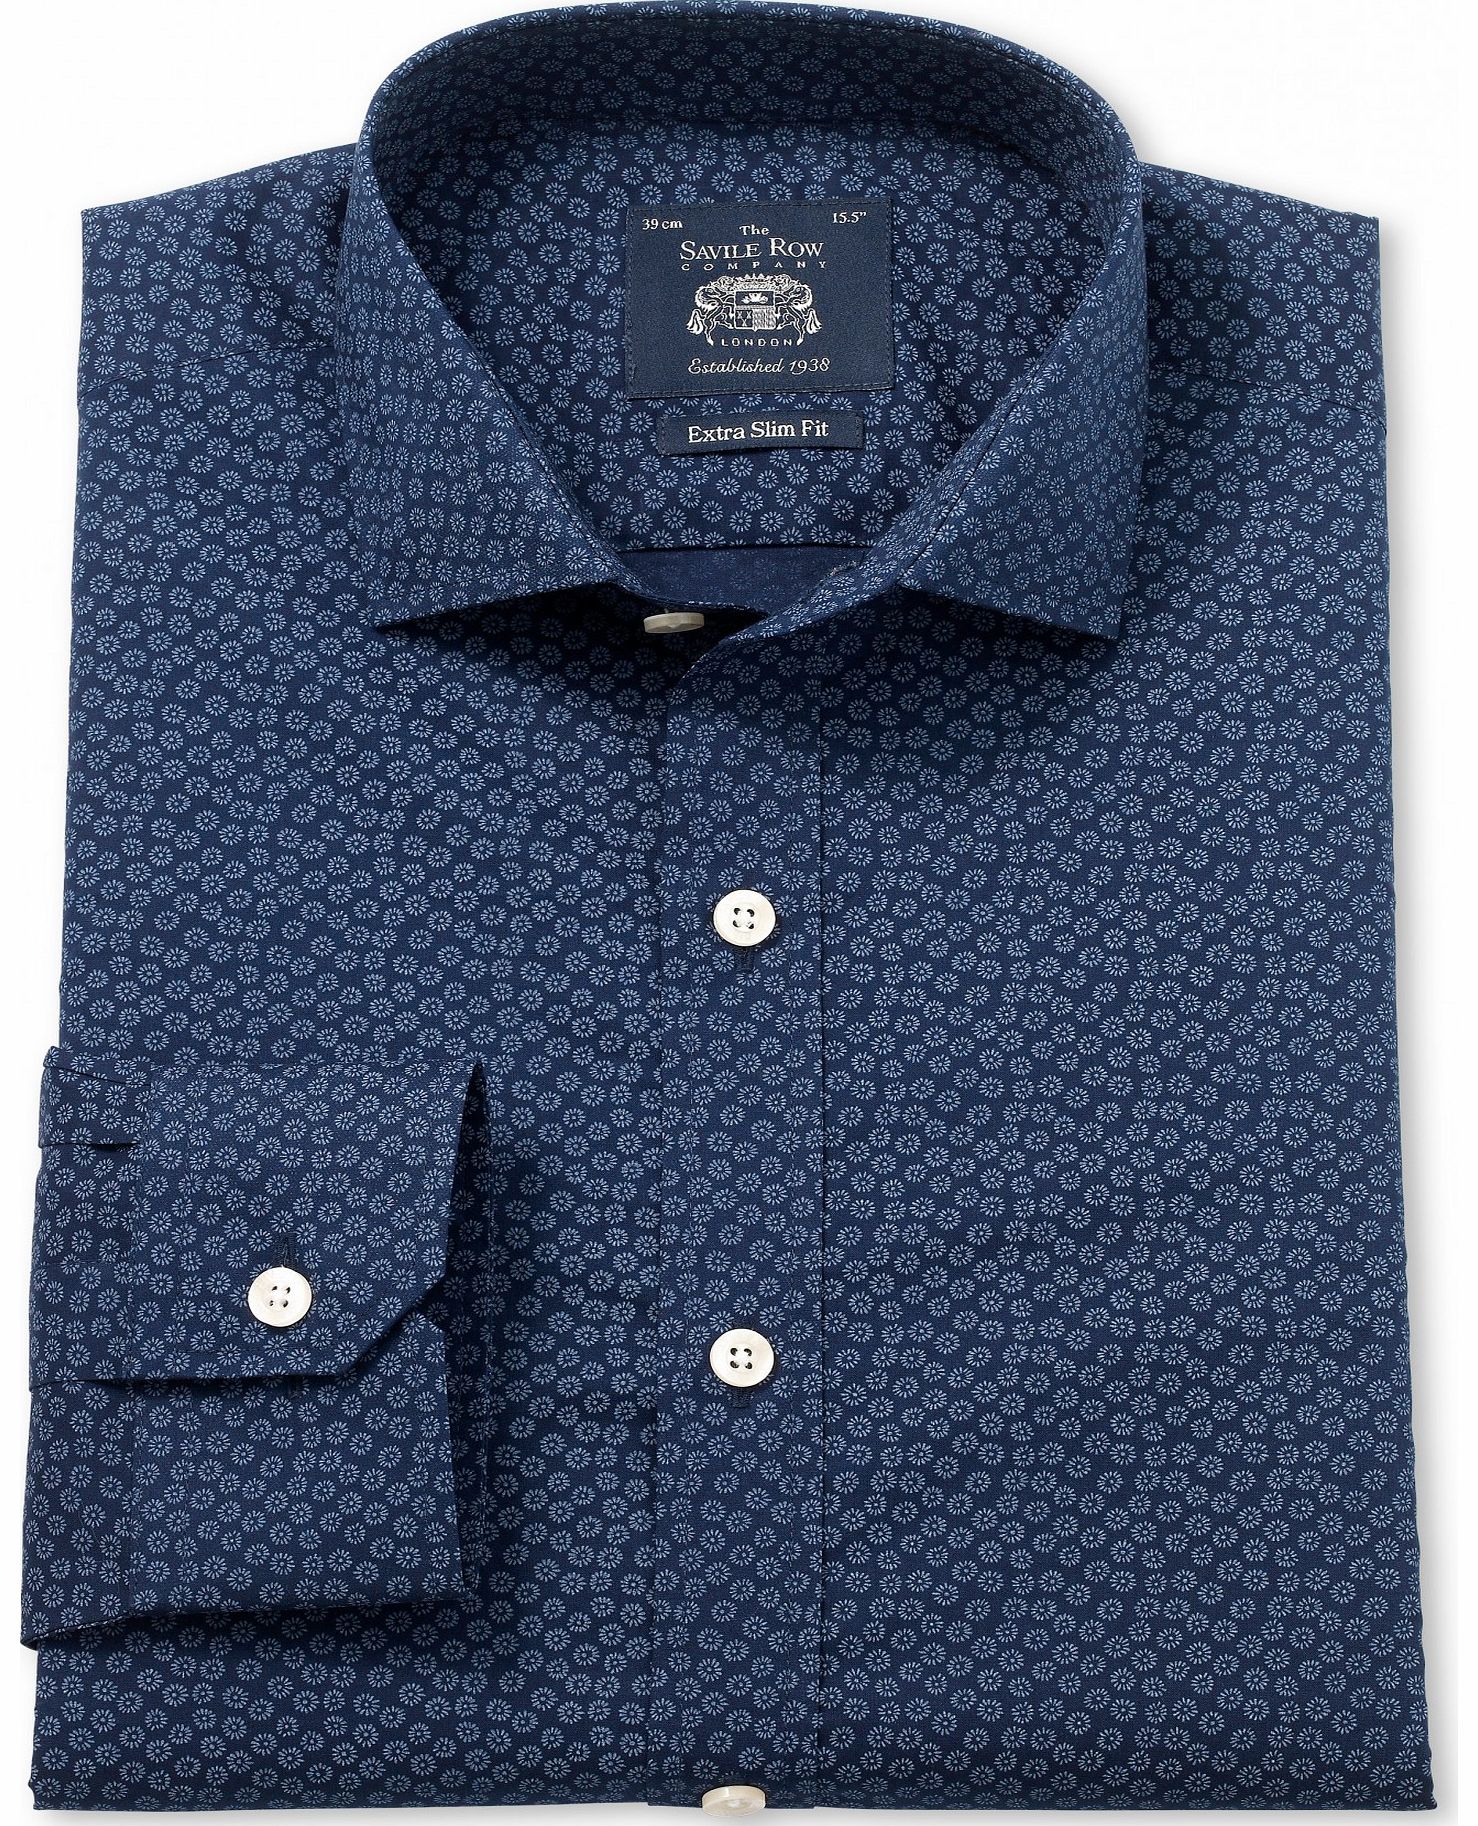 Savile Row Company Navy Blue Printed Extra Slim Fit Shirt 15``